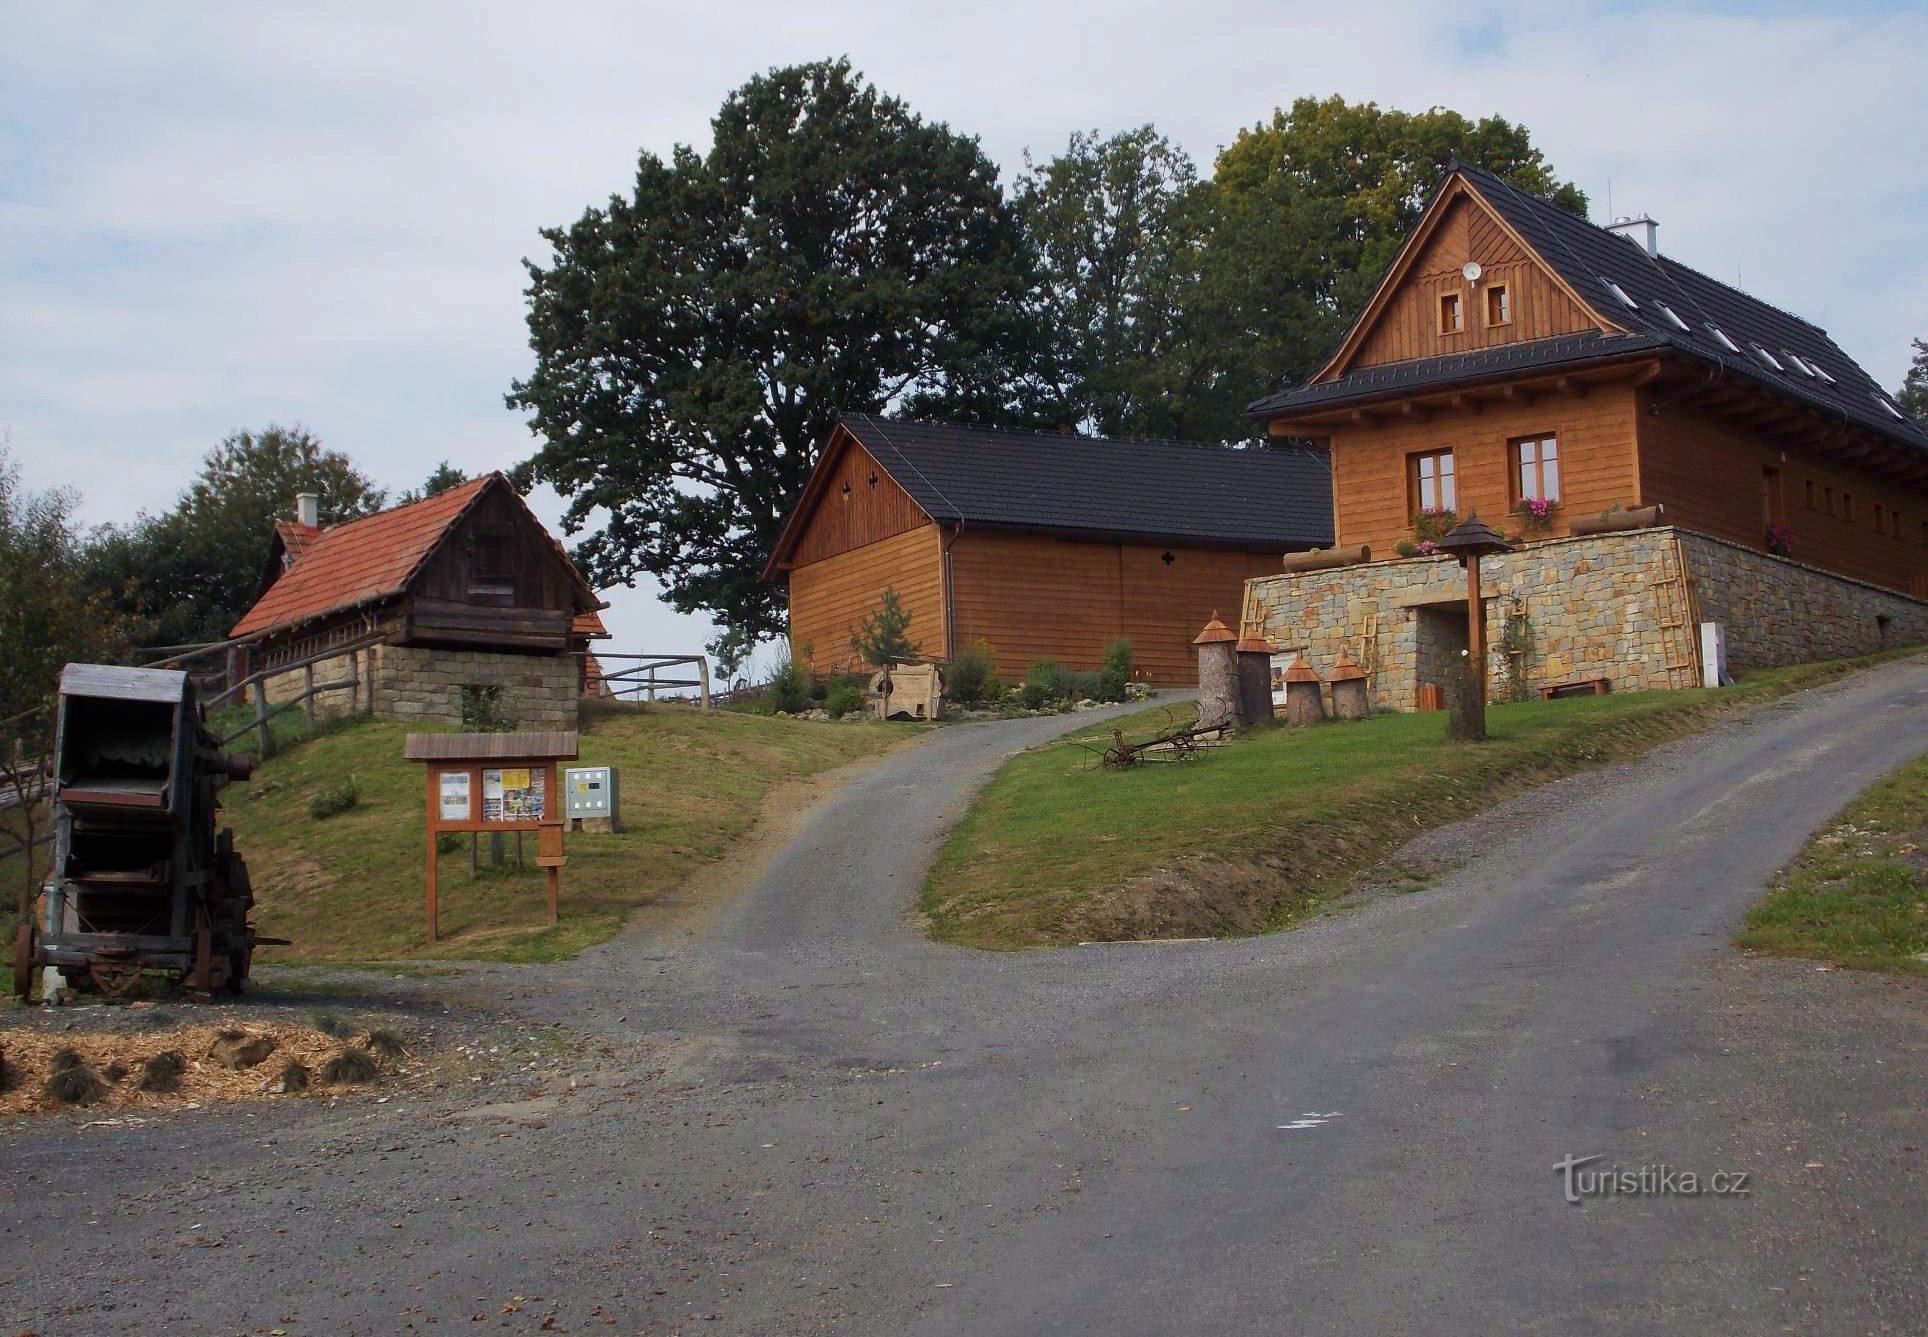 Chuyến đi đến Envicentrum ở Vysoké Pol